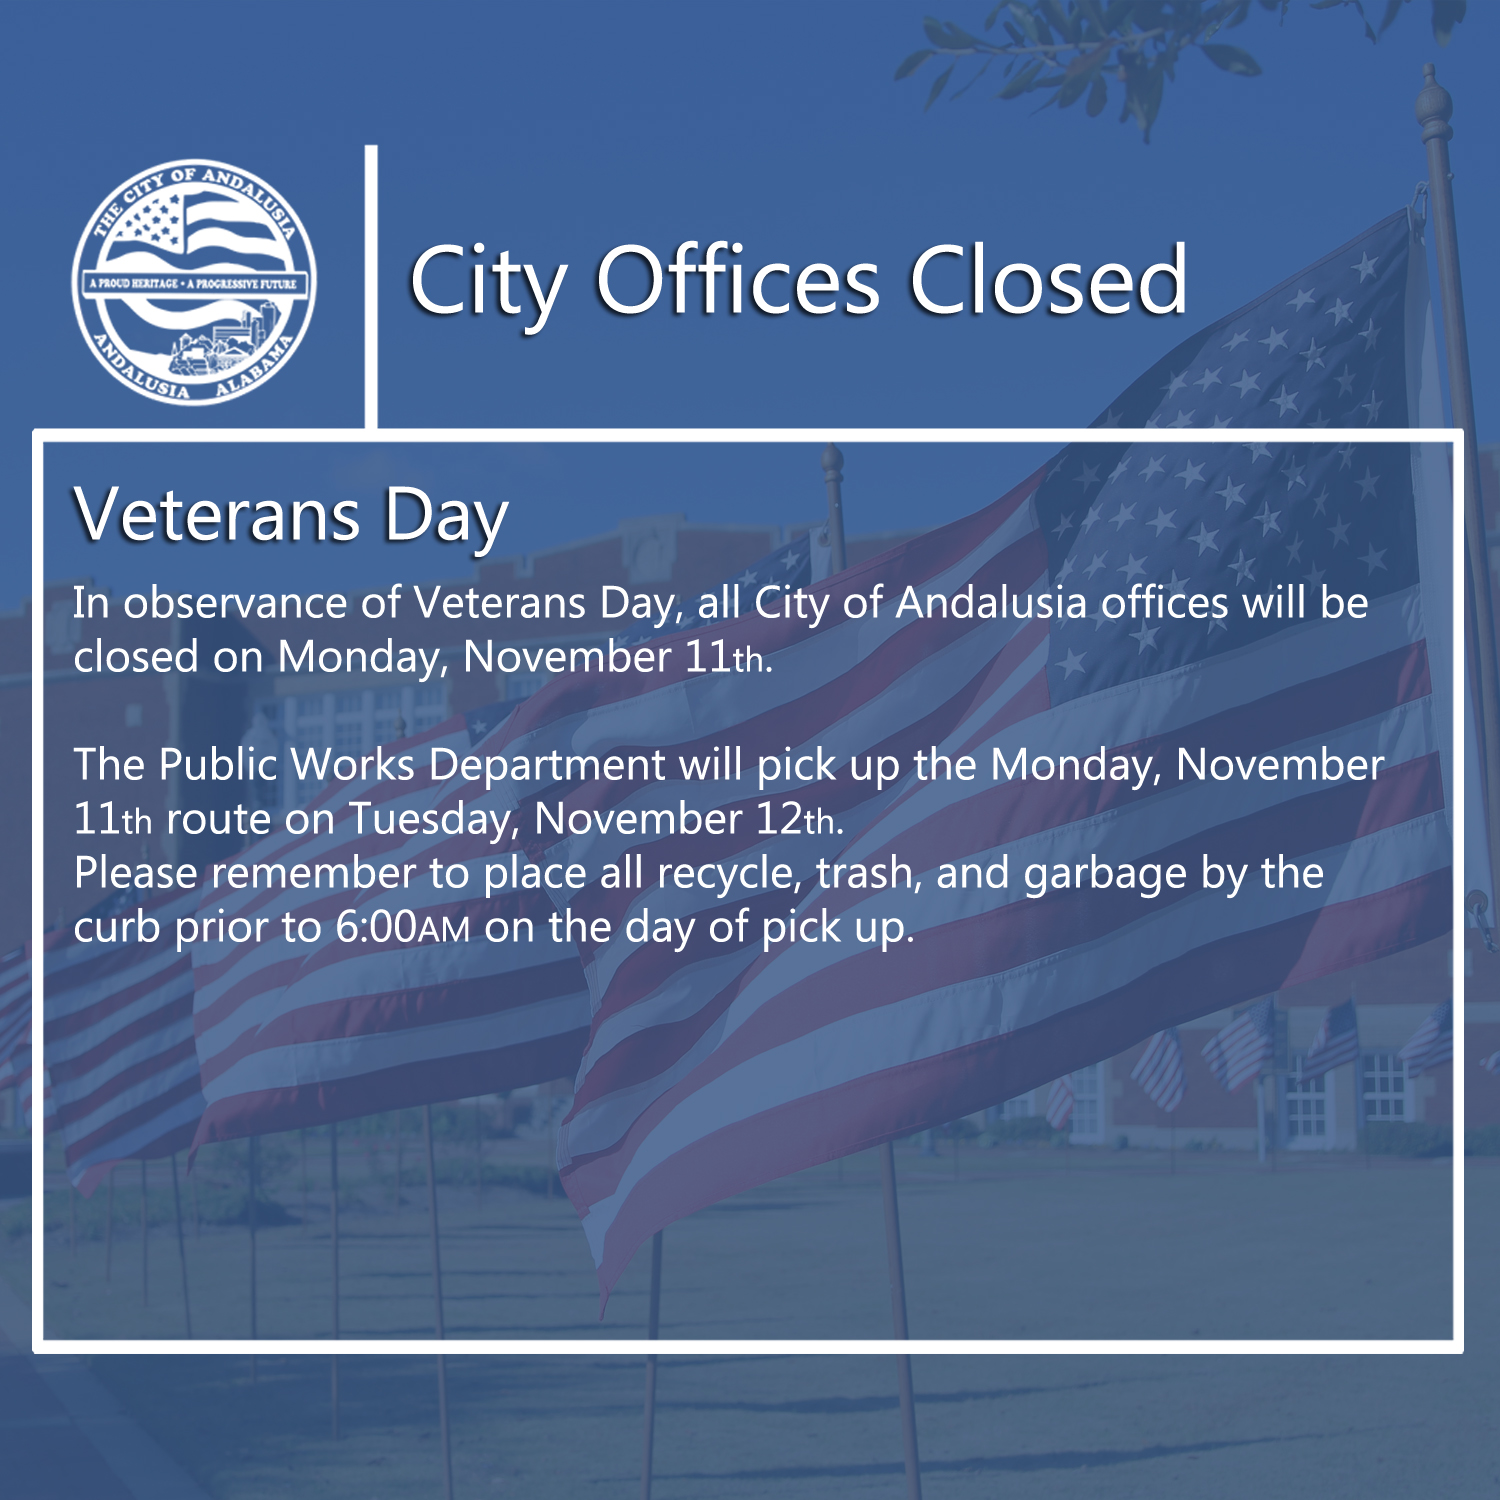 Facebook City Offices Closed Veterans